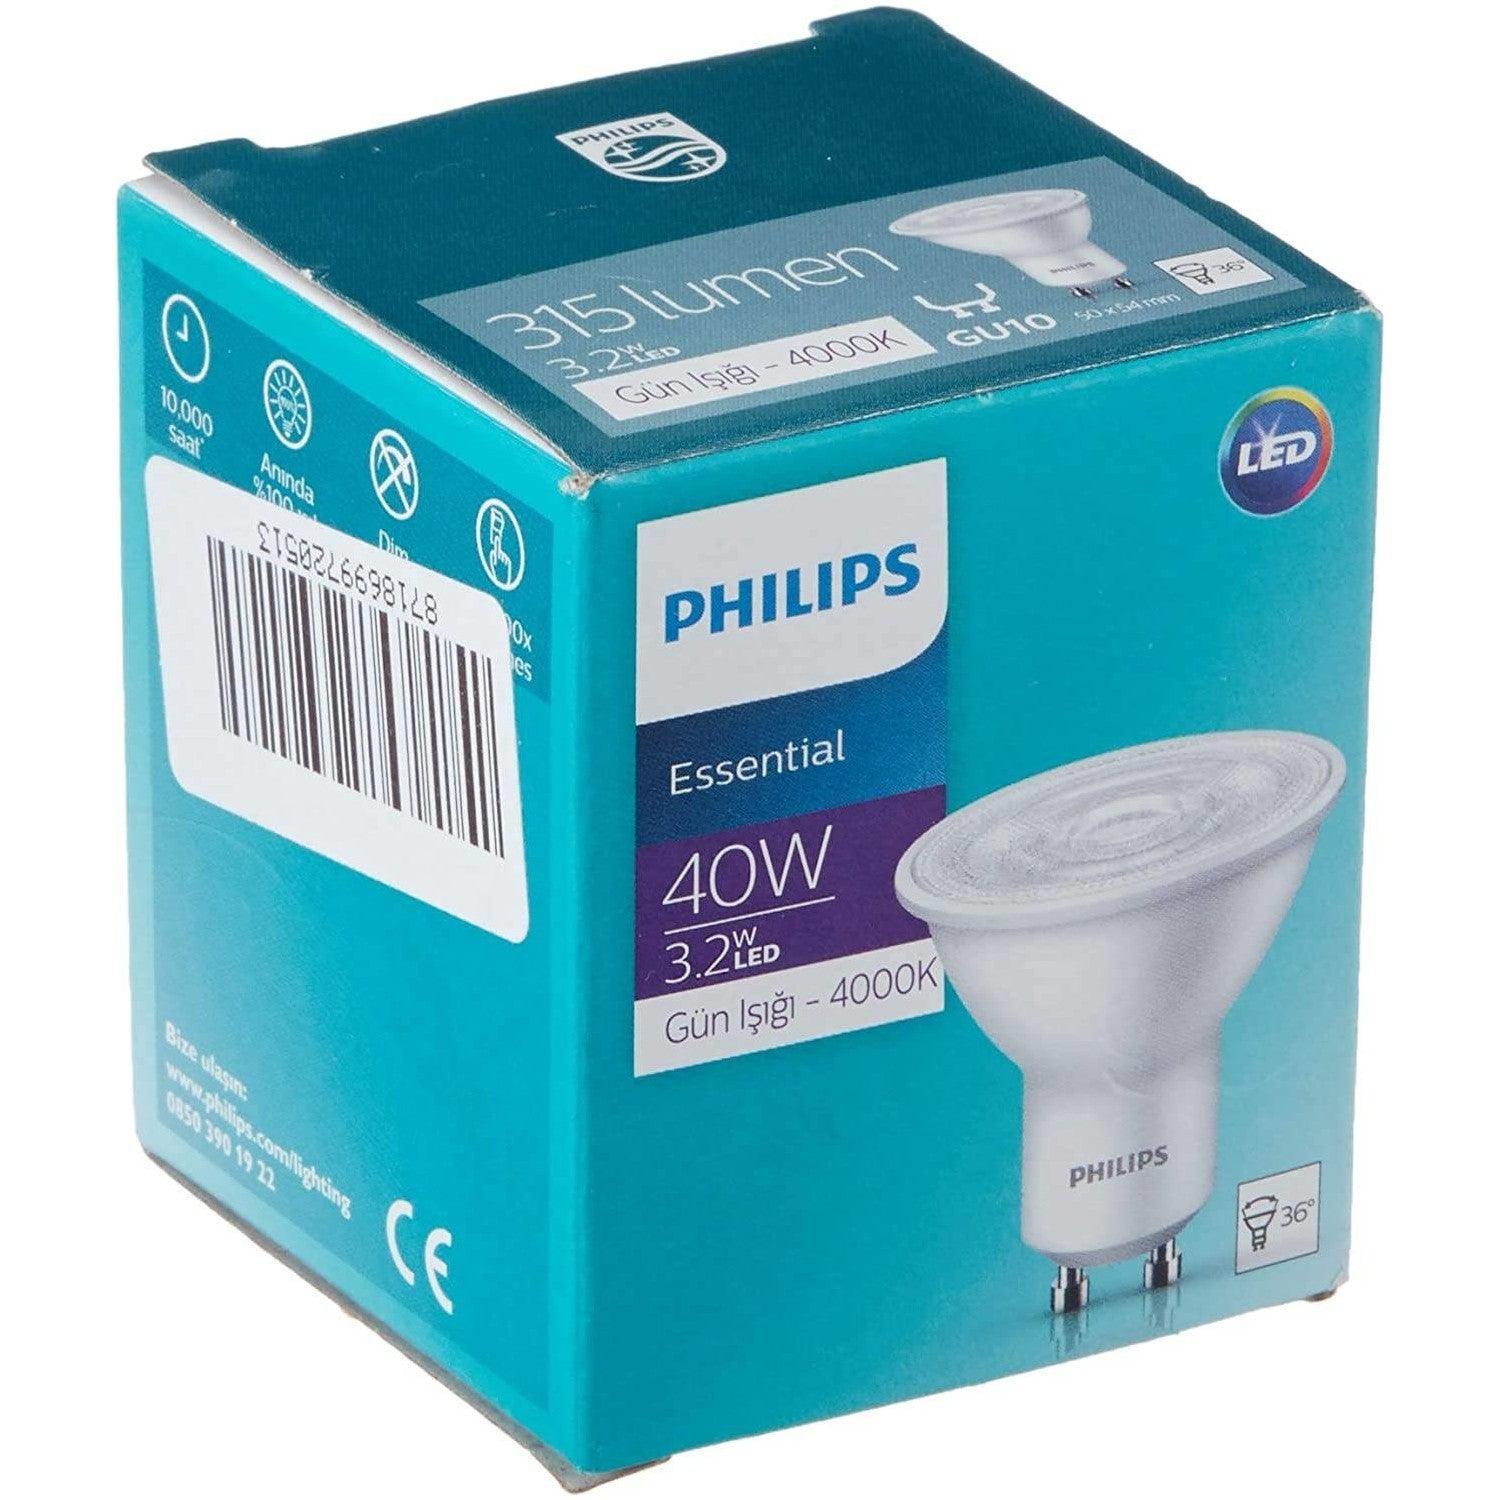 PHILIPS ESSENTİAL 3,2W 40W GU10 LED SPOT AMPUL 4000K - Philips